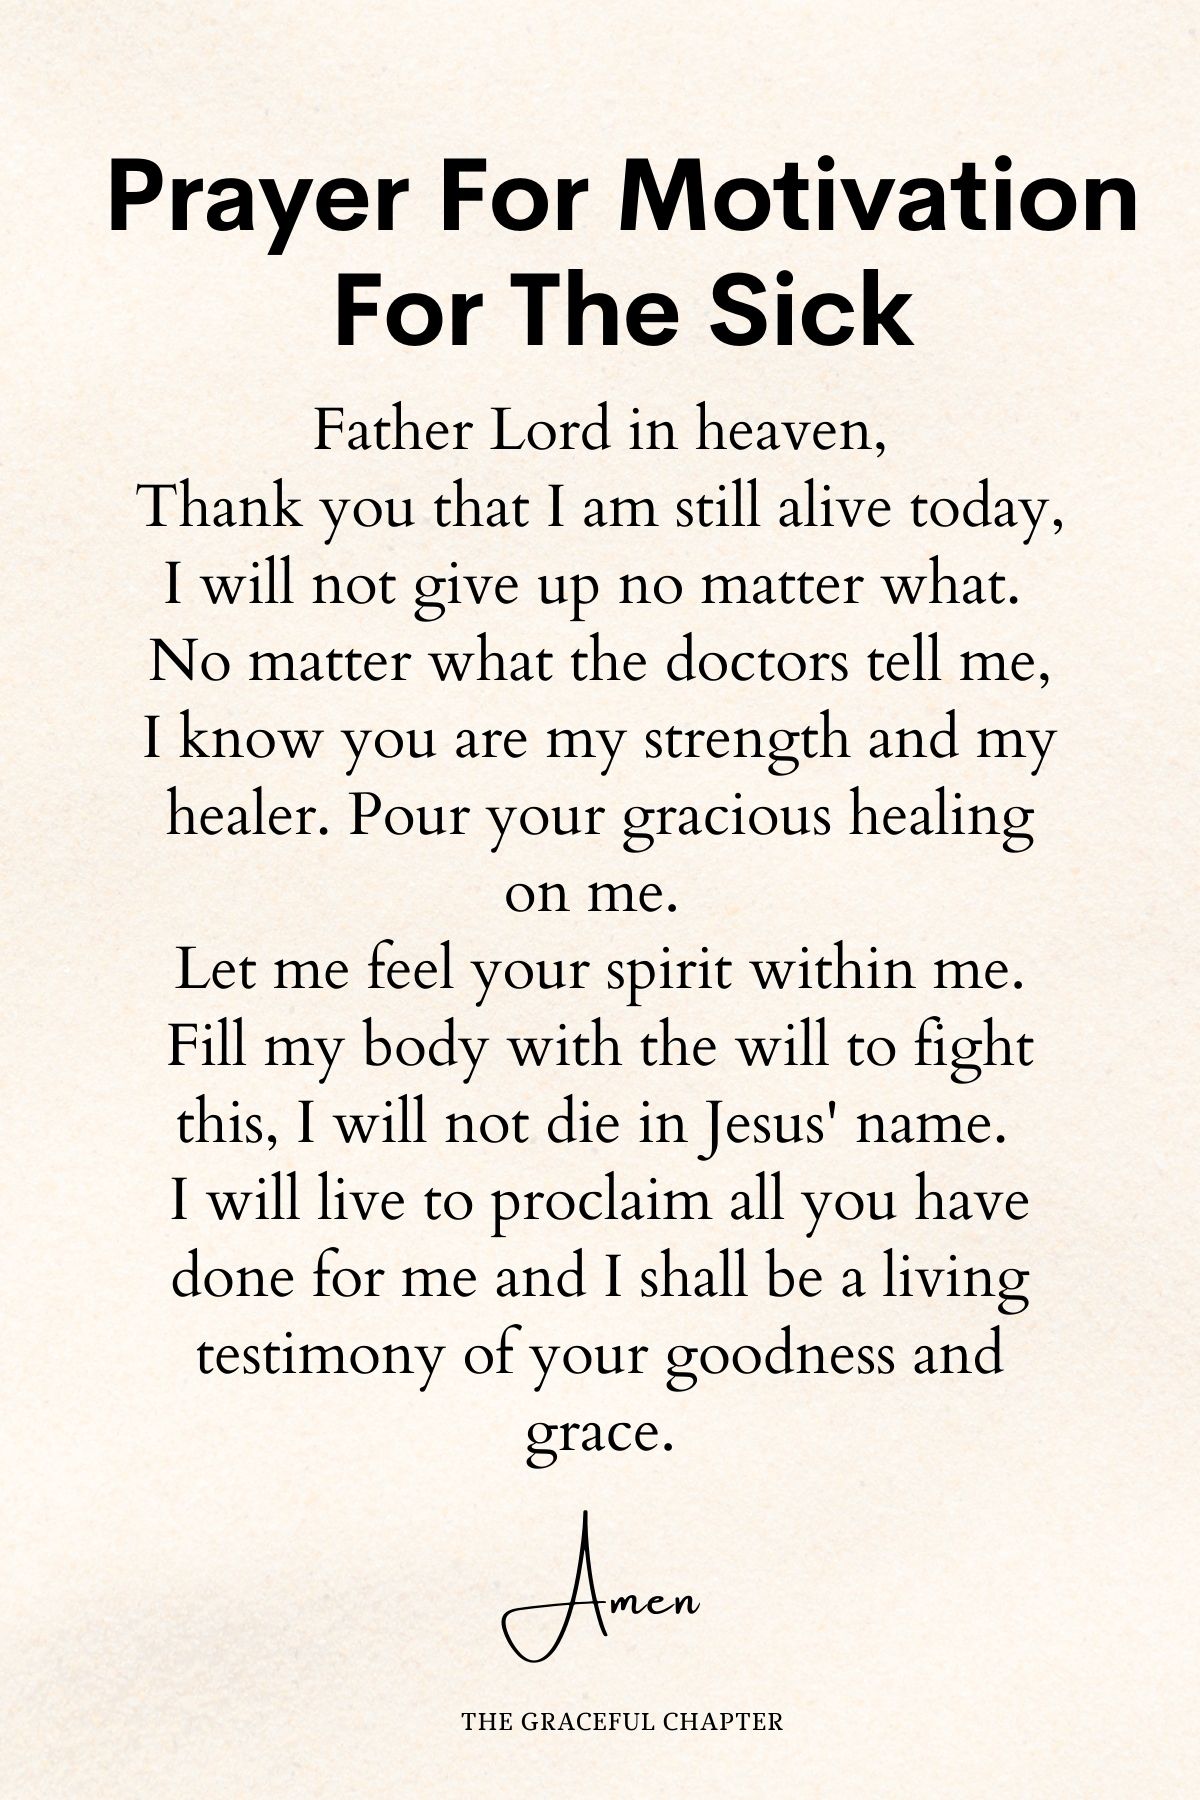 Prayer for motivation for the sick